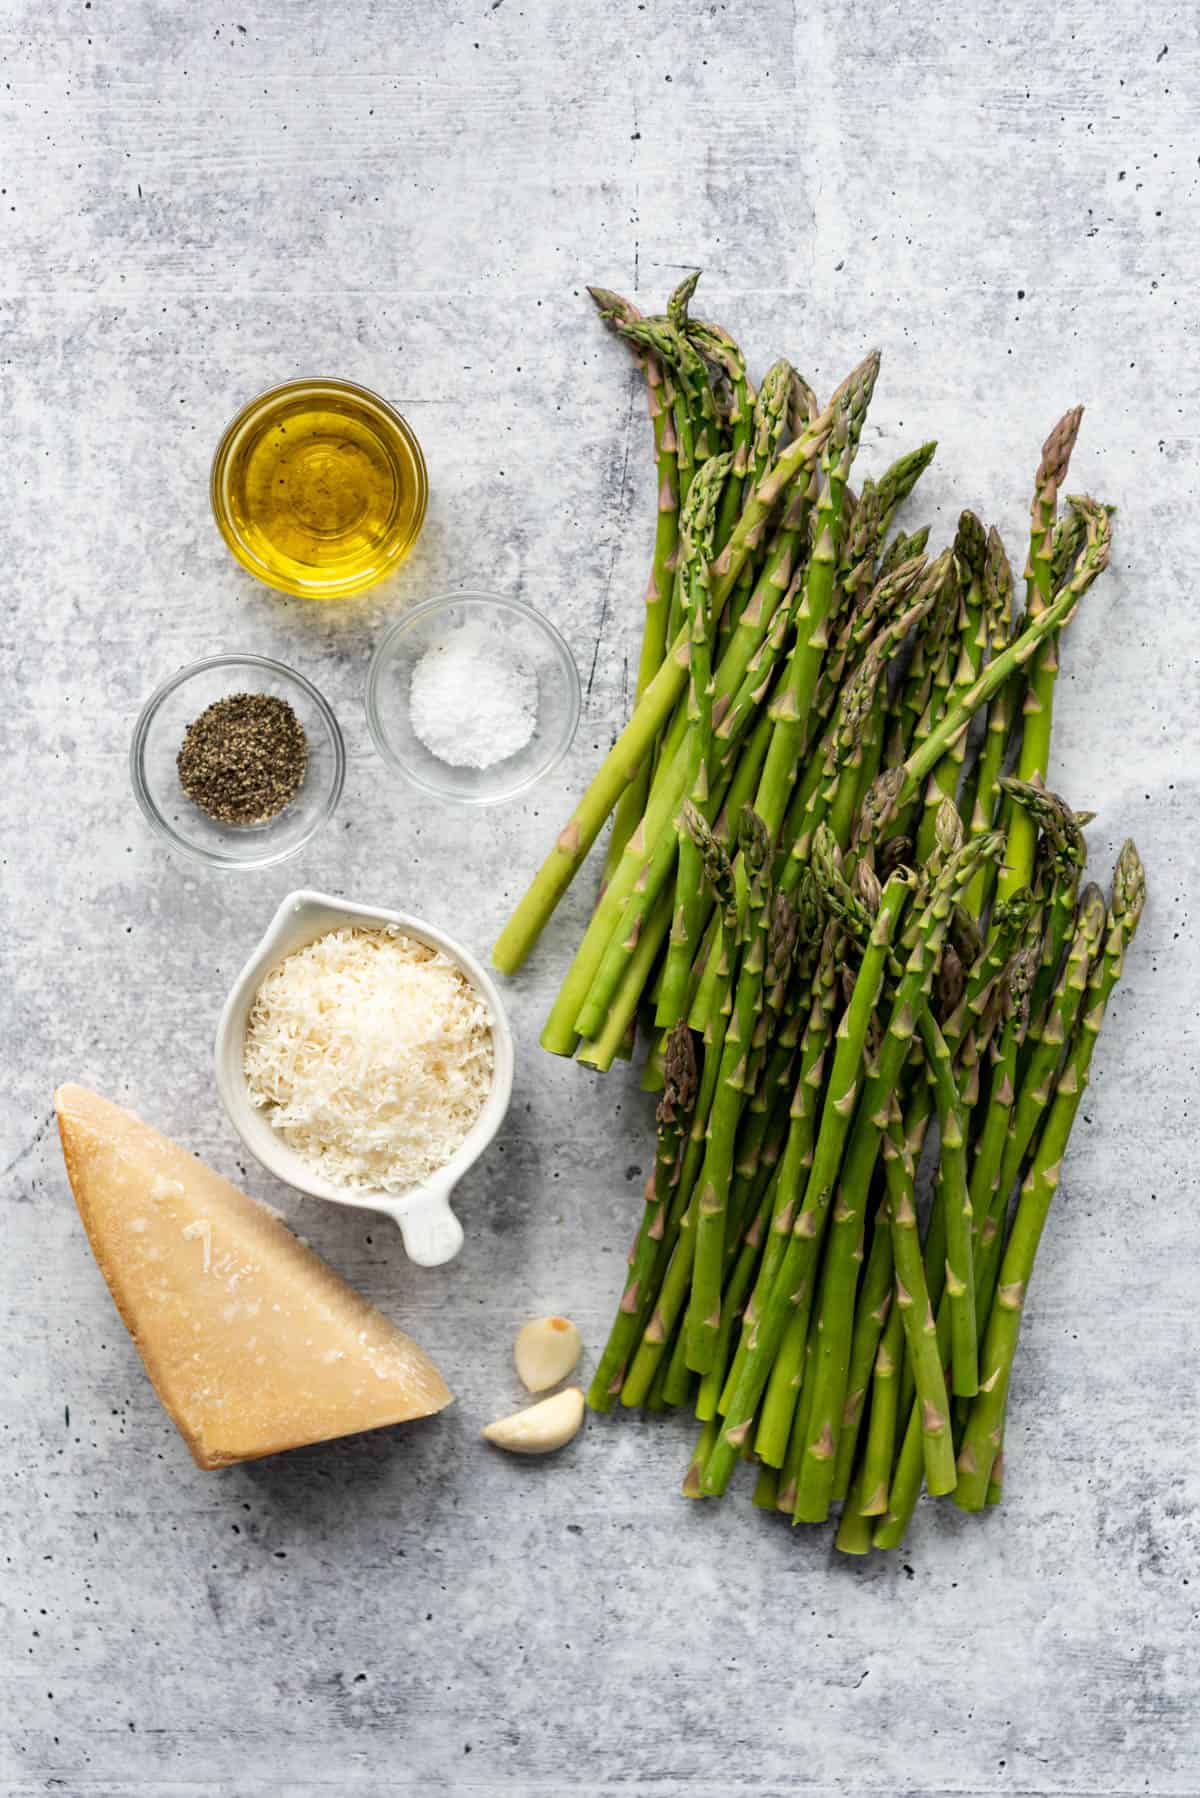 Ingredients for making air fryer asparagus.